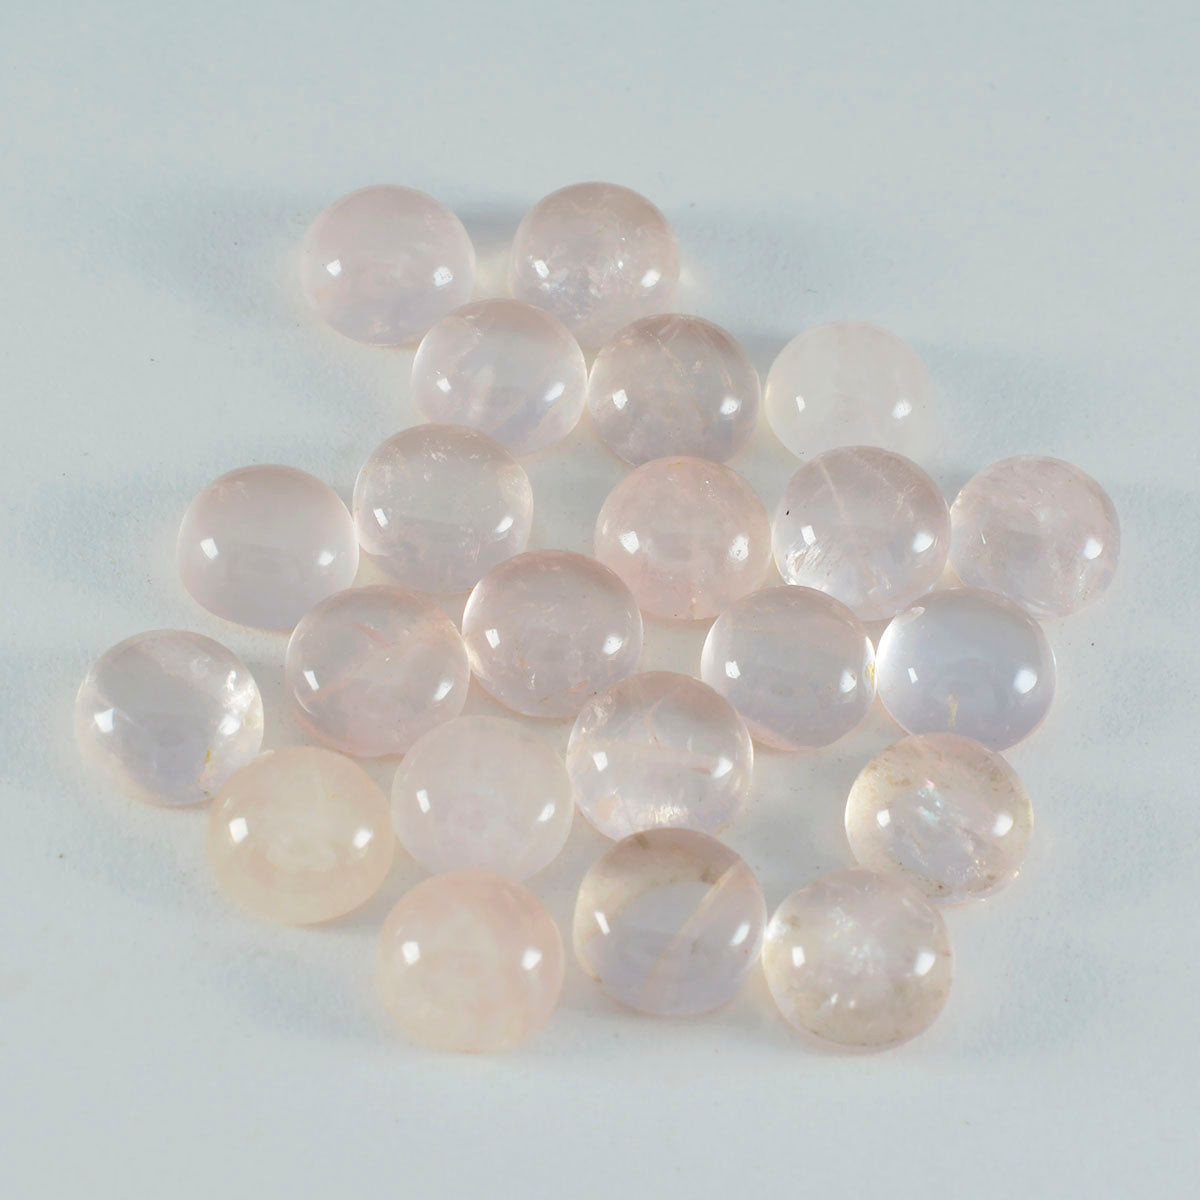 Riyogems 1PC roze rozenkwarts cabochon 7x7 mm ronde vorm goede kwaliteit losse steen